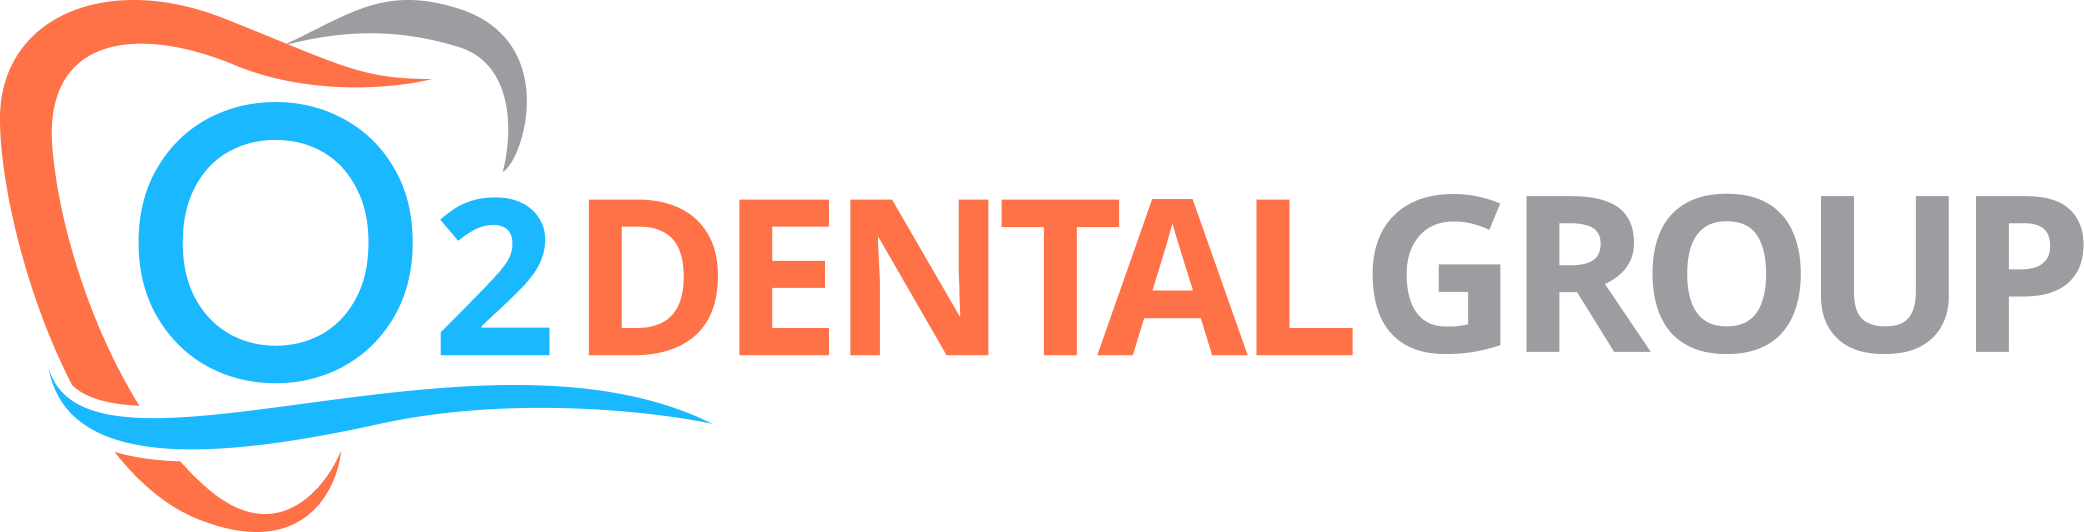 O2 Dental Group of Durham - logo